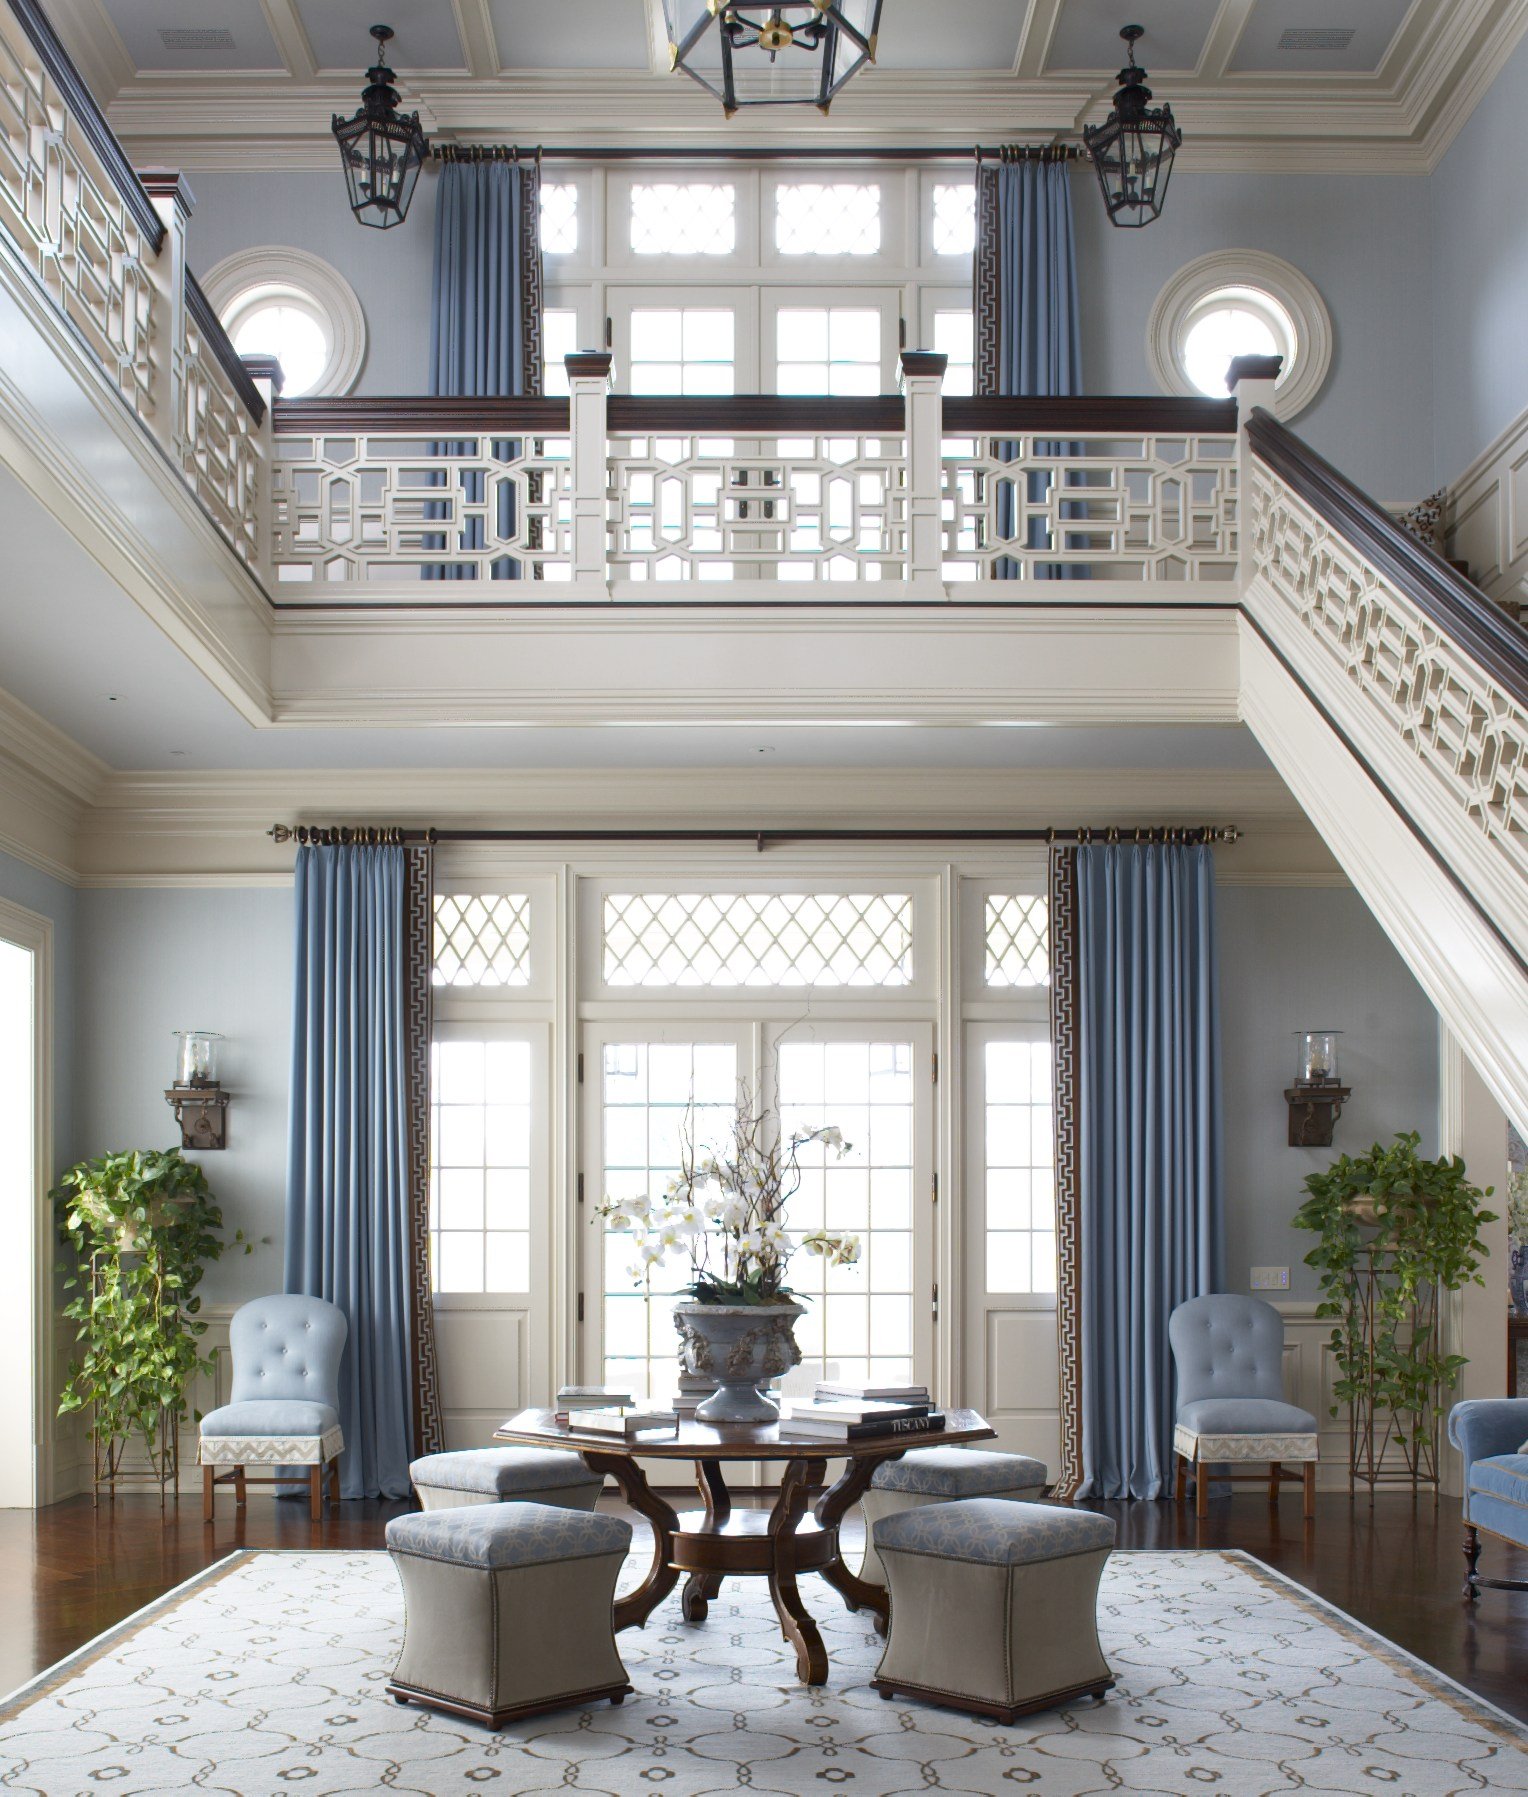 2-white-brown-blue-details-natural-large-light-windows-chic-accents-rinfret-interior-designs.jpg